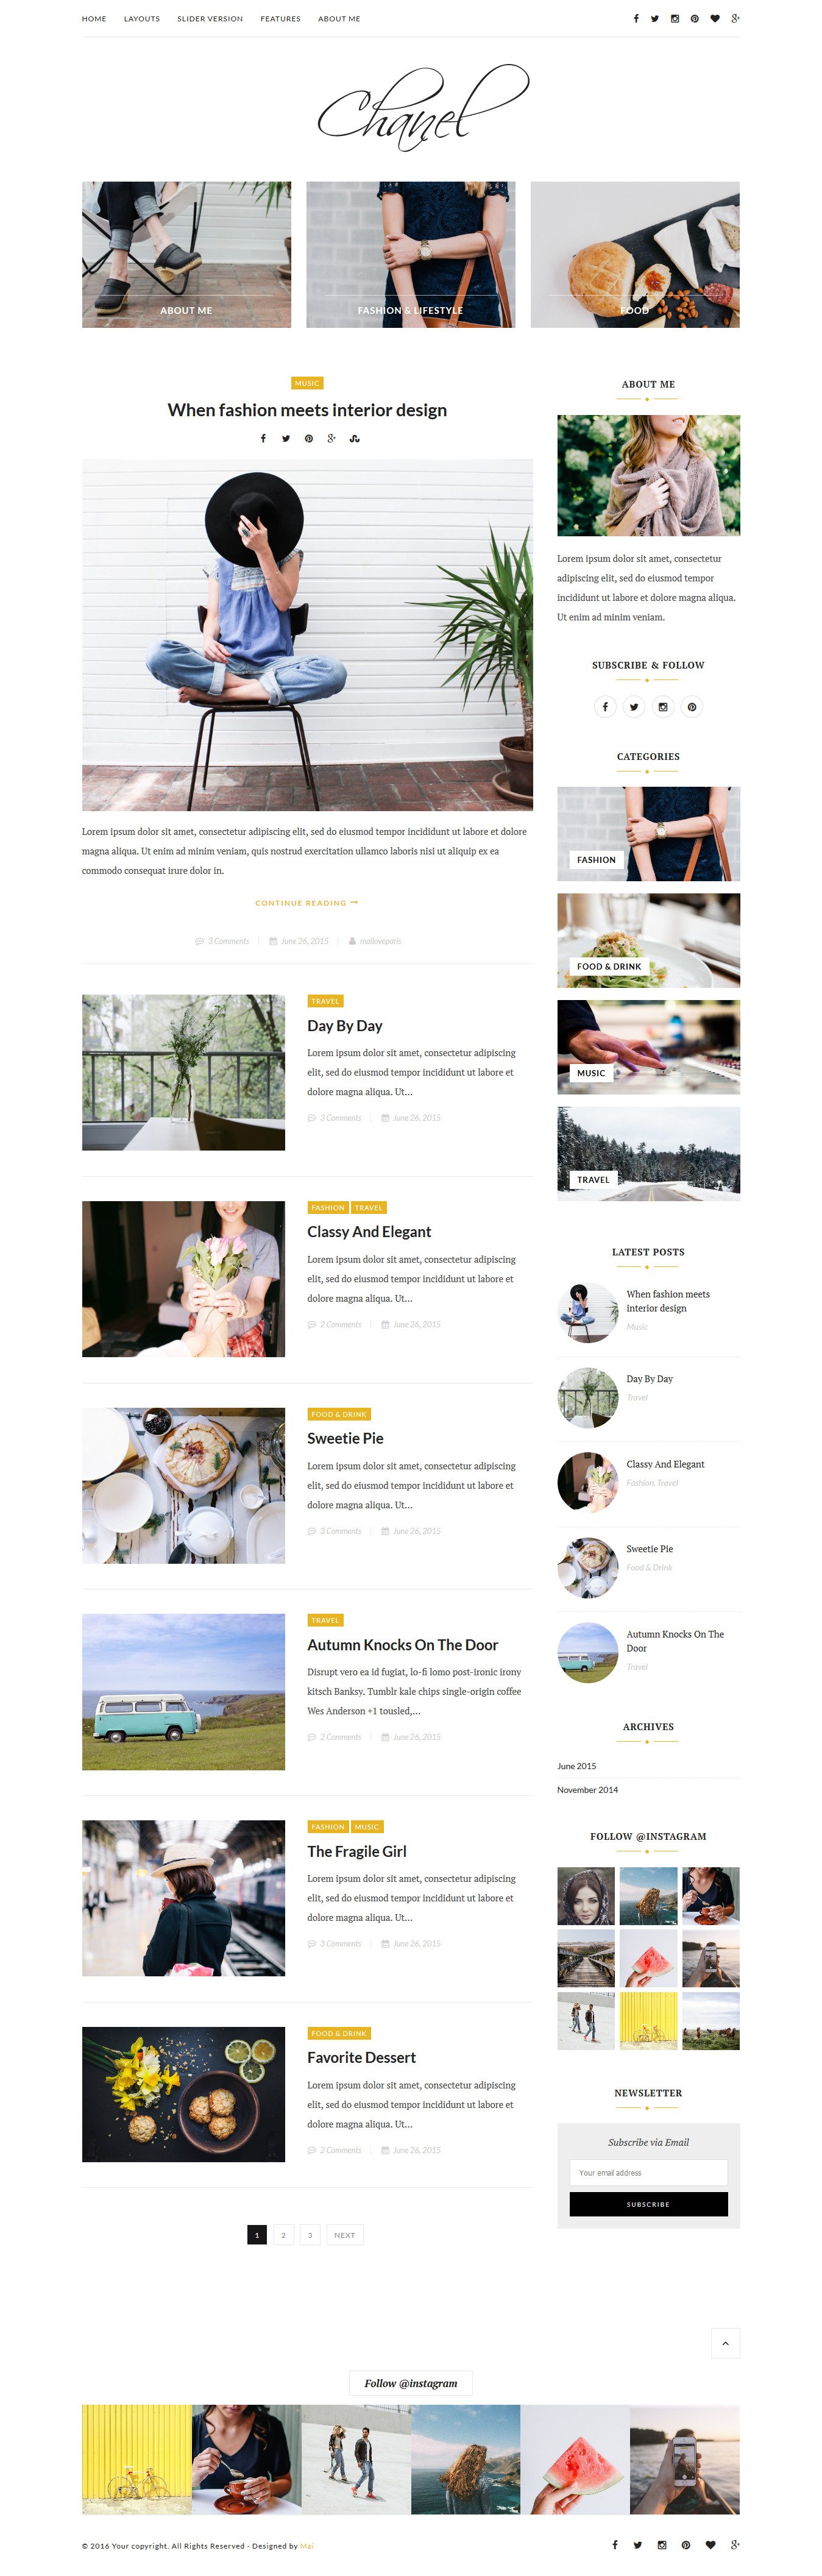 Chanel - WordPress blog theme